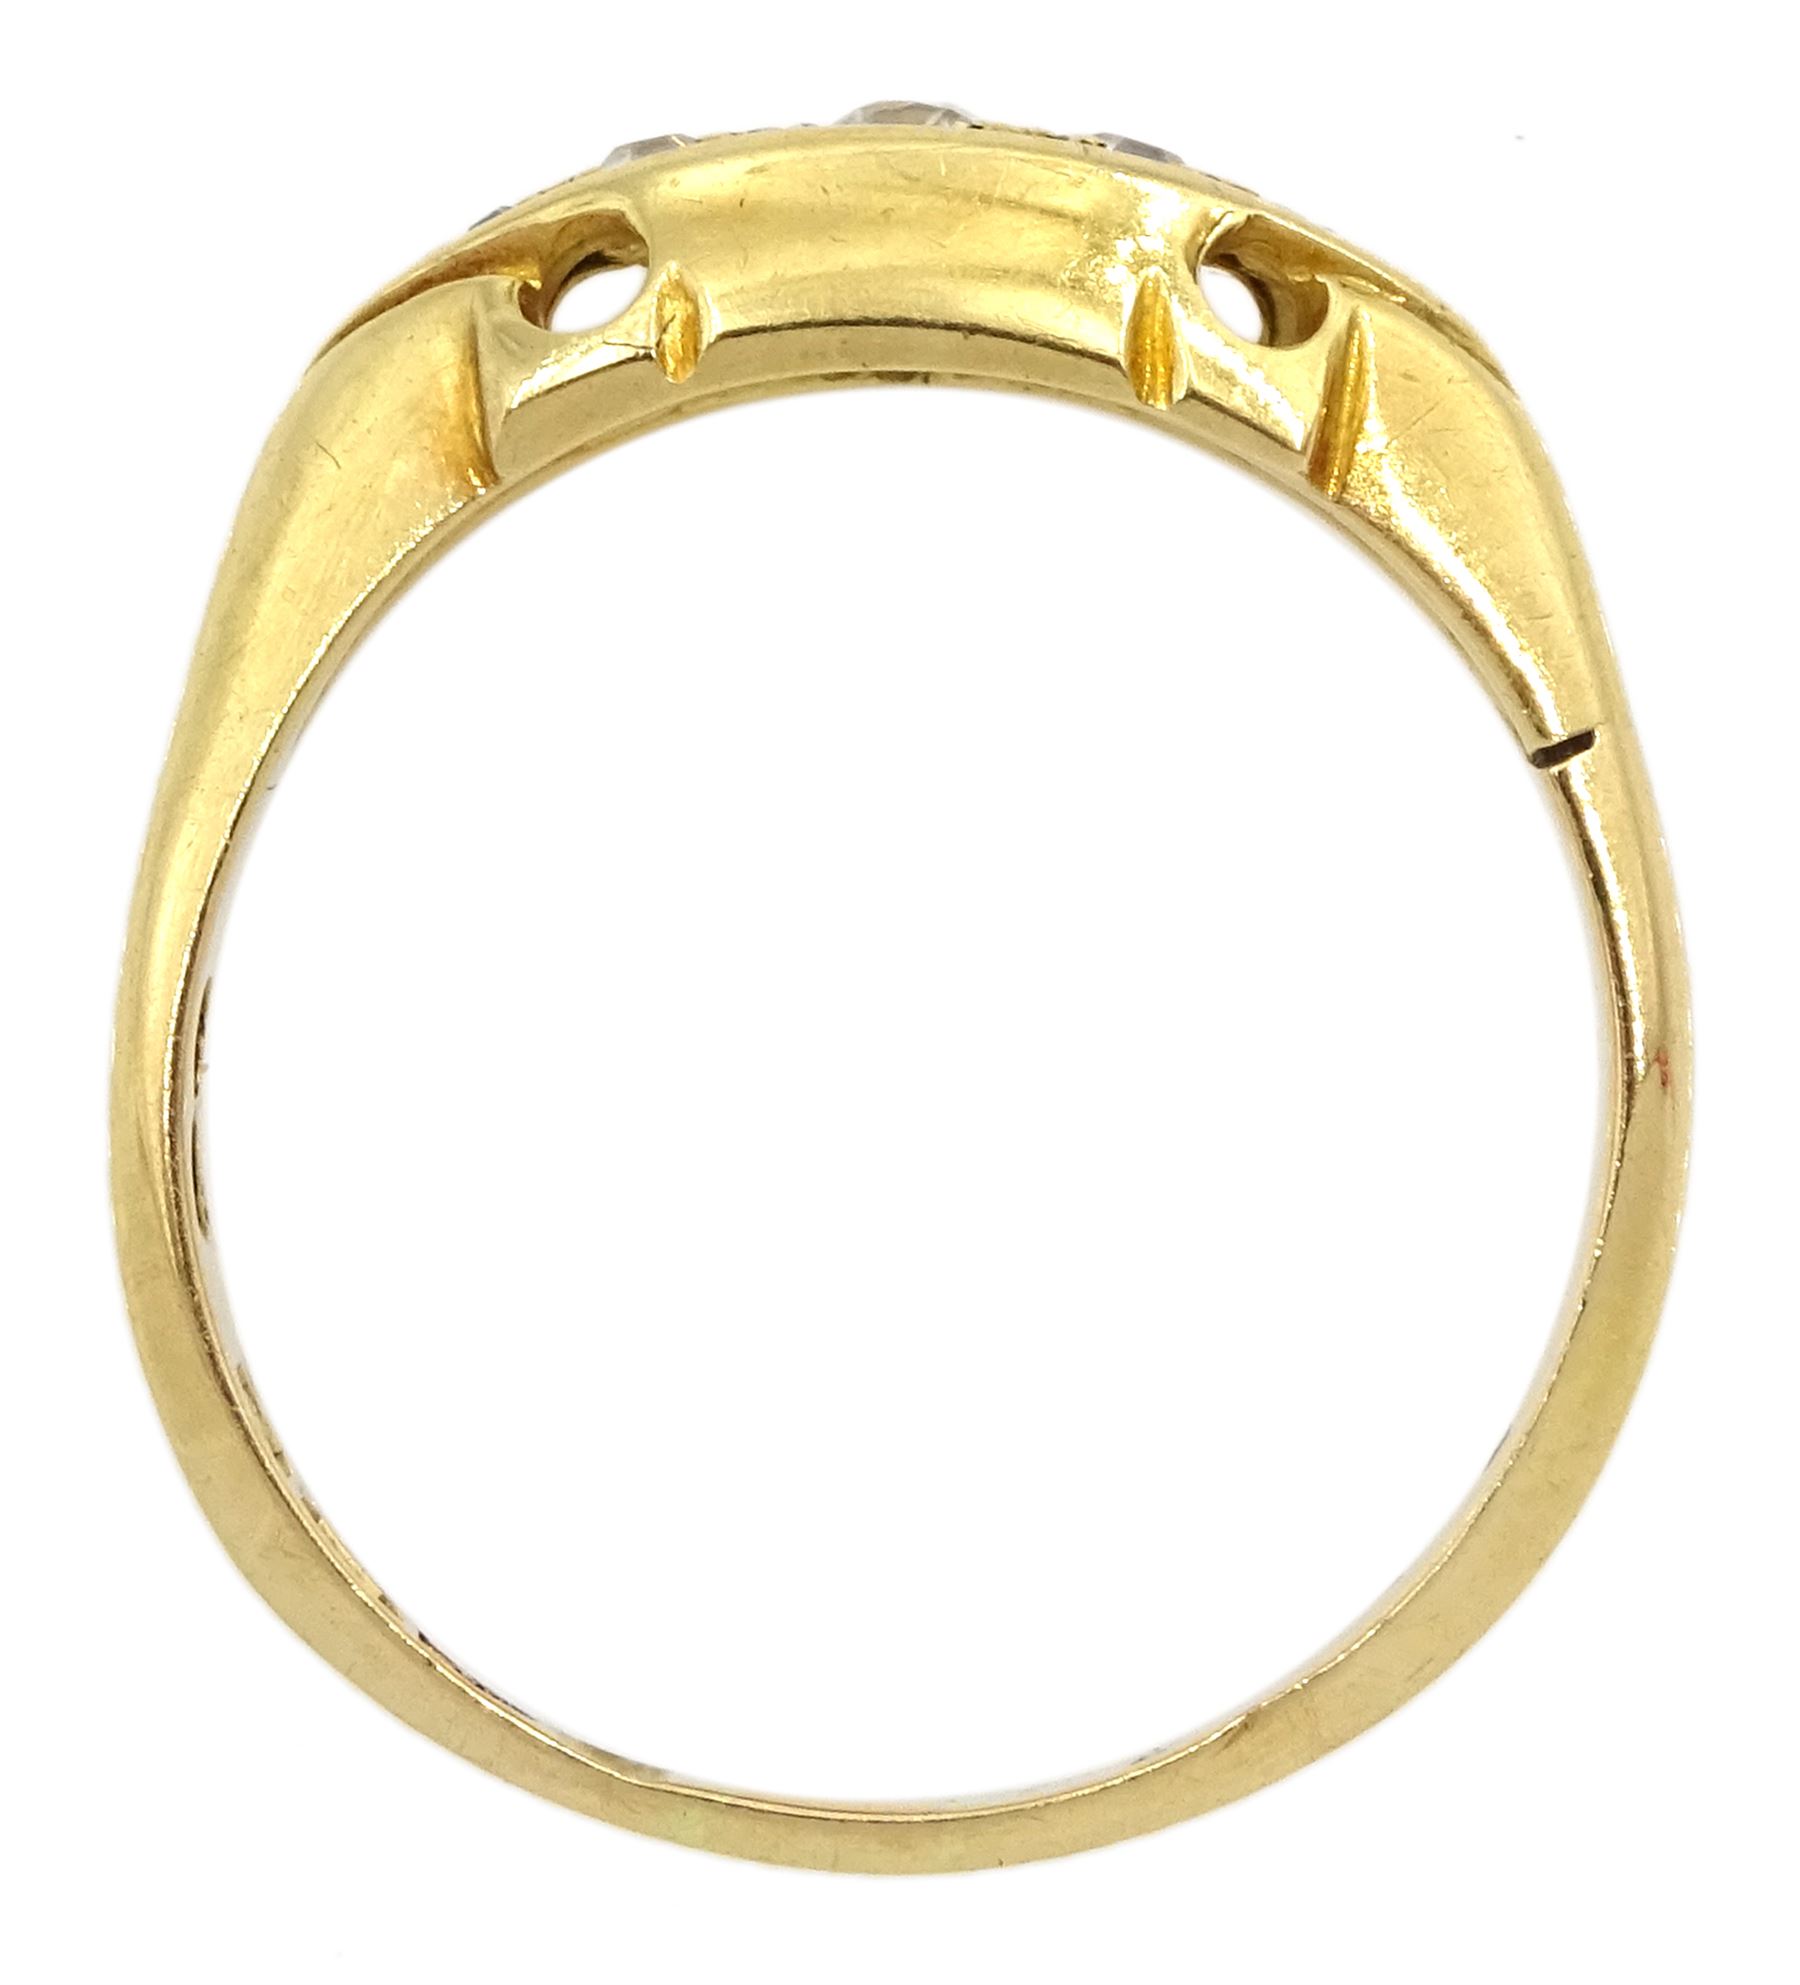 Edwardian 18ct gold five stone graduating diamond marquise shaped ring - Image 4 of 4